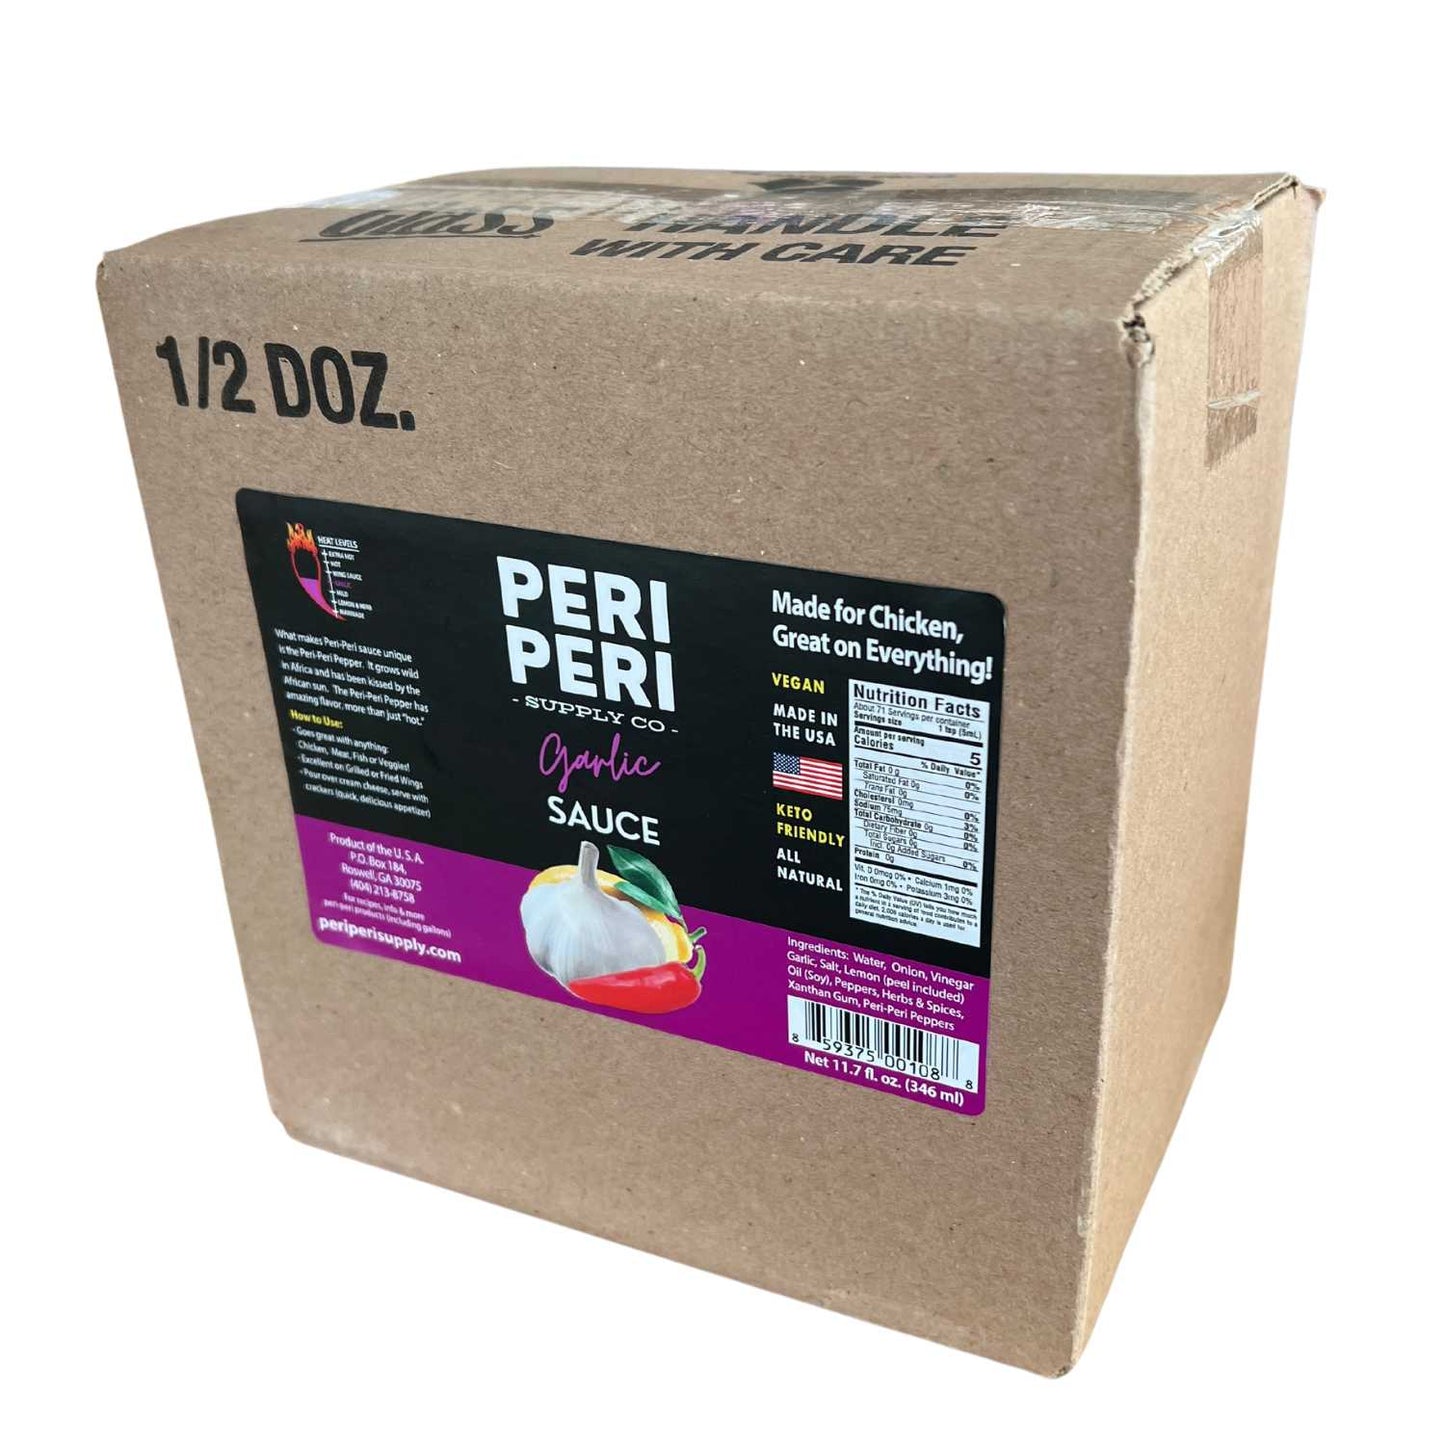 Garlic Peri Peri sauce - Medium Heat level - Vegan, Gluten Free, Sugar Free, Made in America, Keto and Paleo Friendly